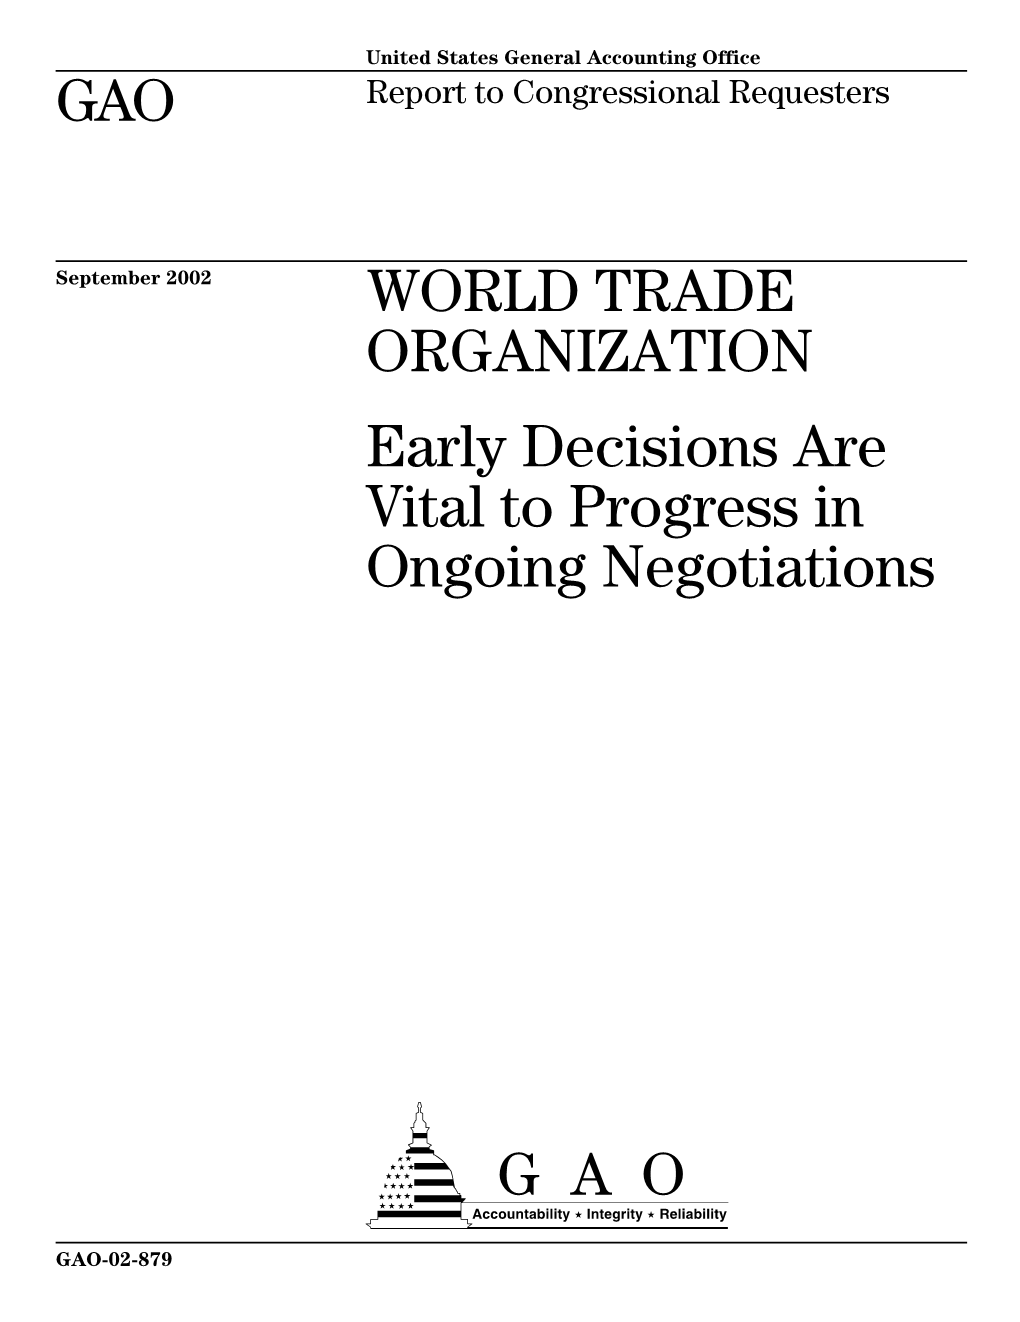 GAO-02-879 World Trade Organization: the Doha Development Agenda Contents